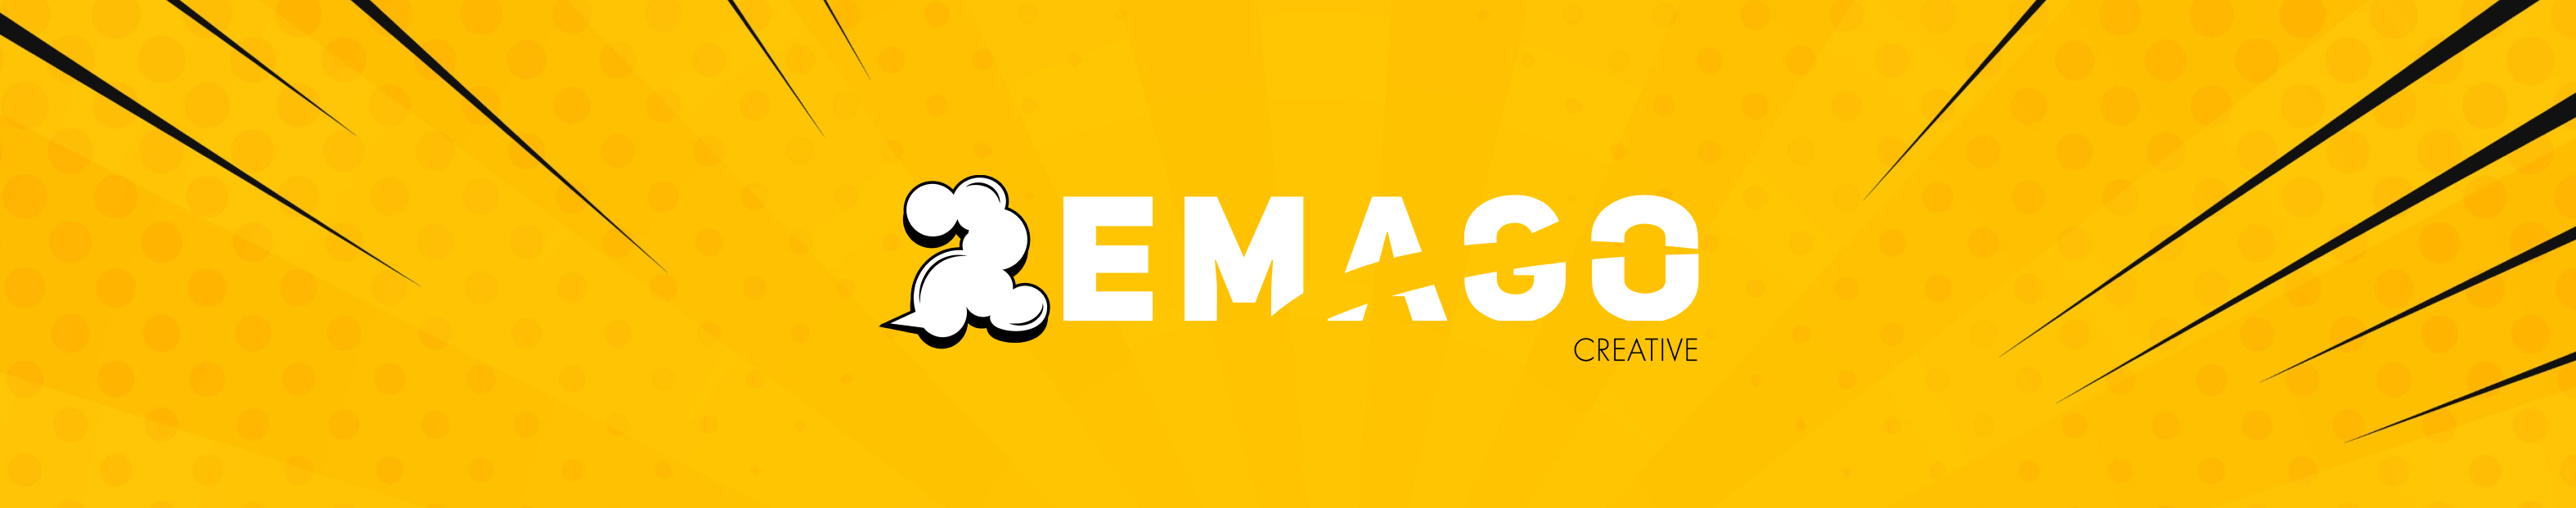 Remago Creative's profile banner